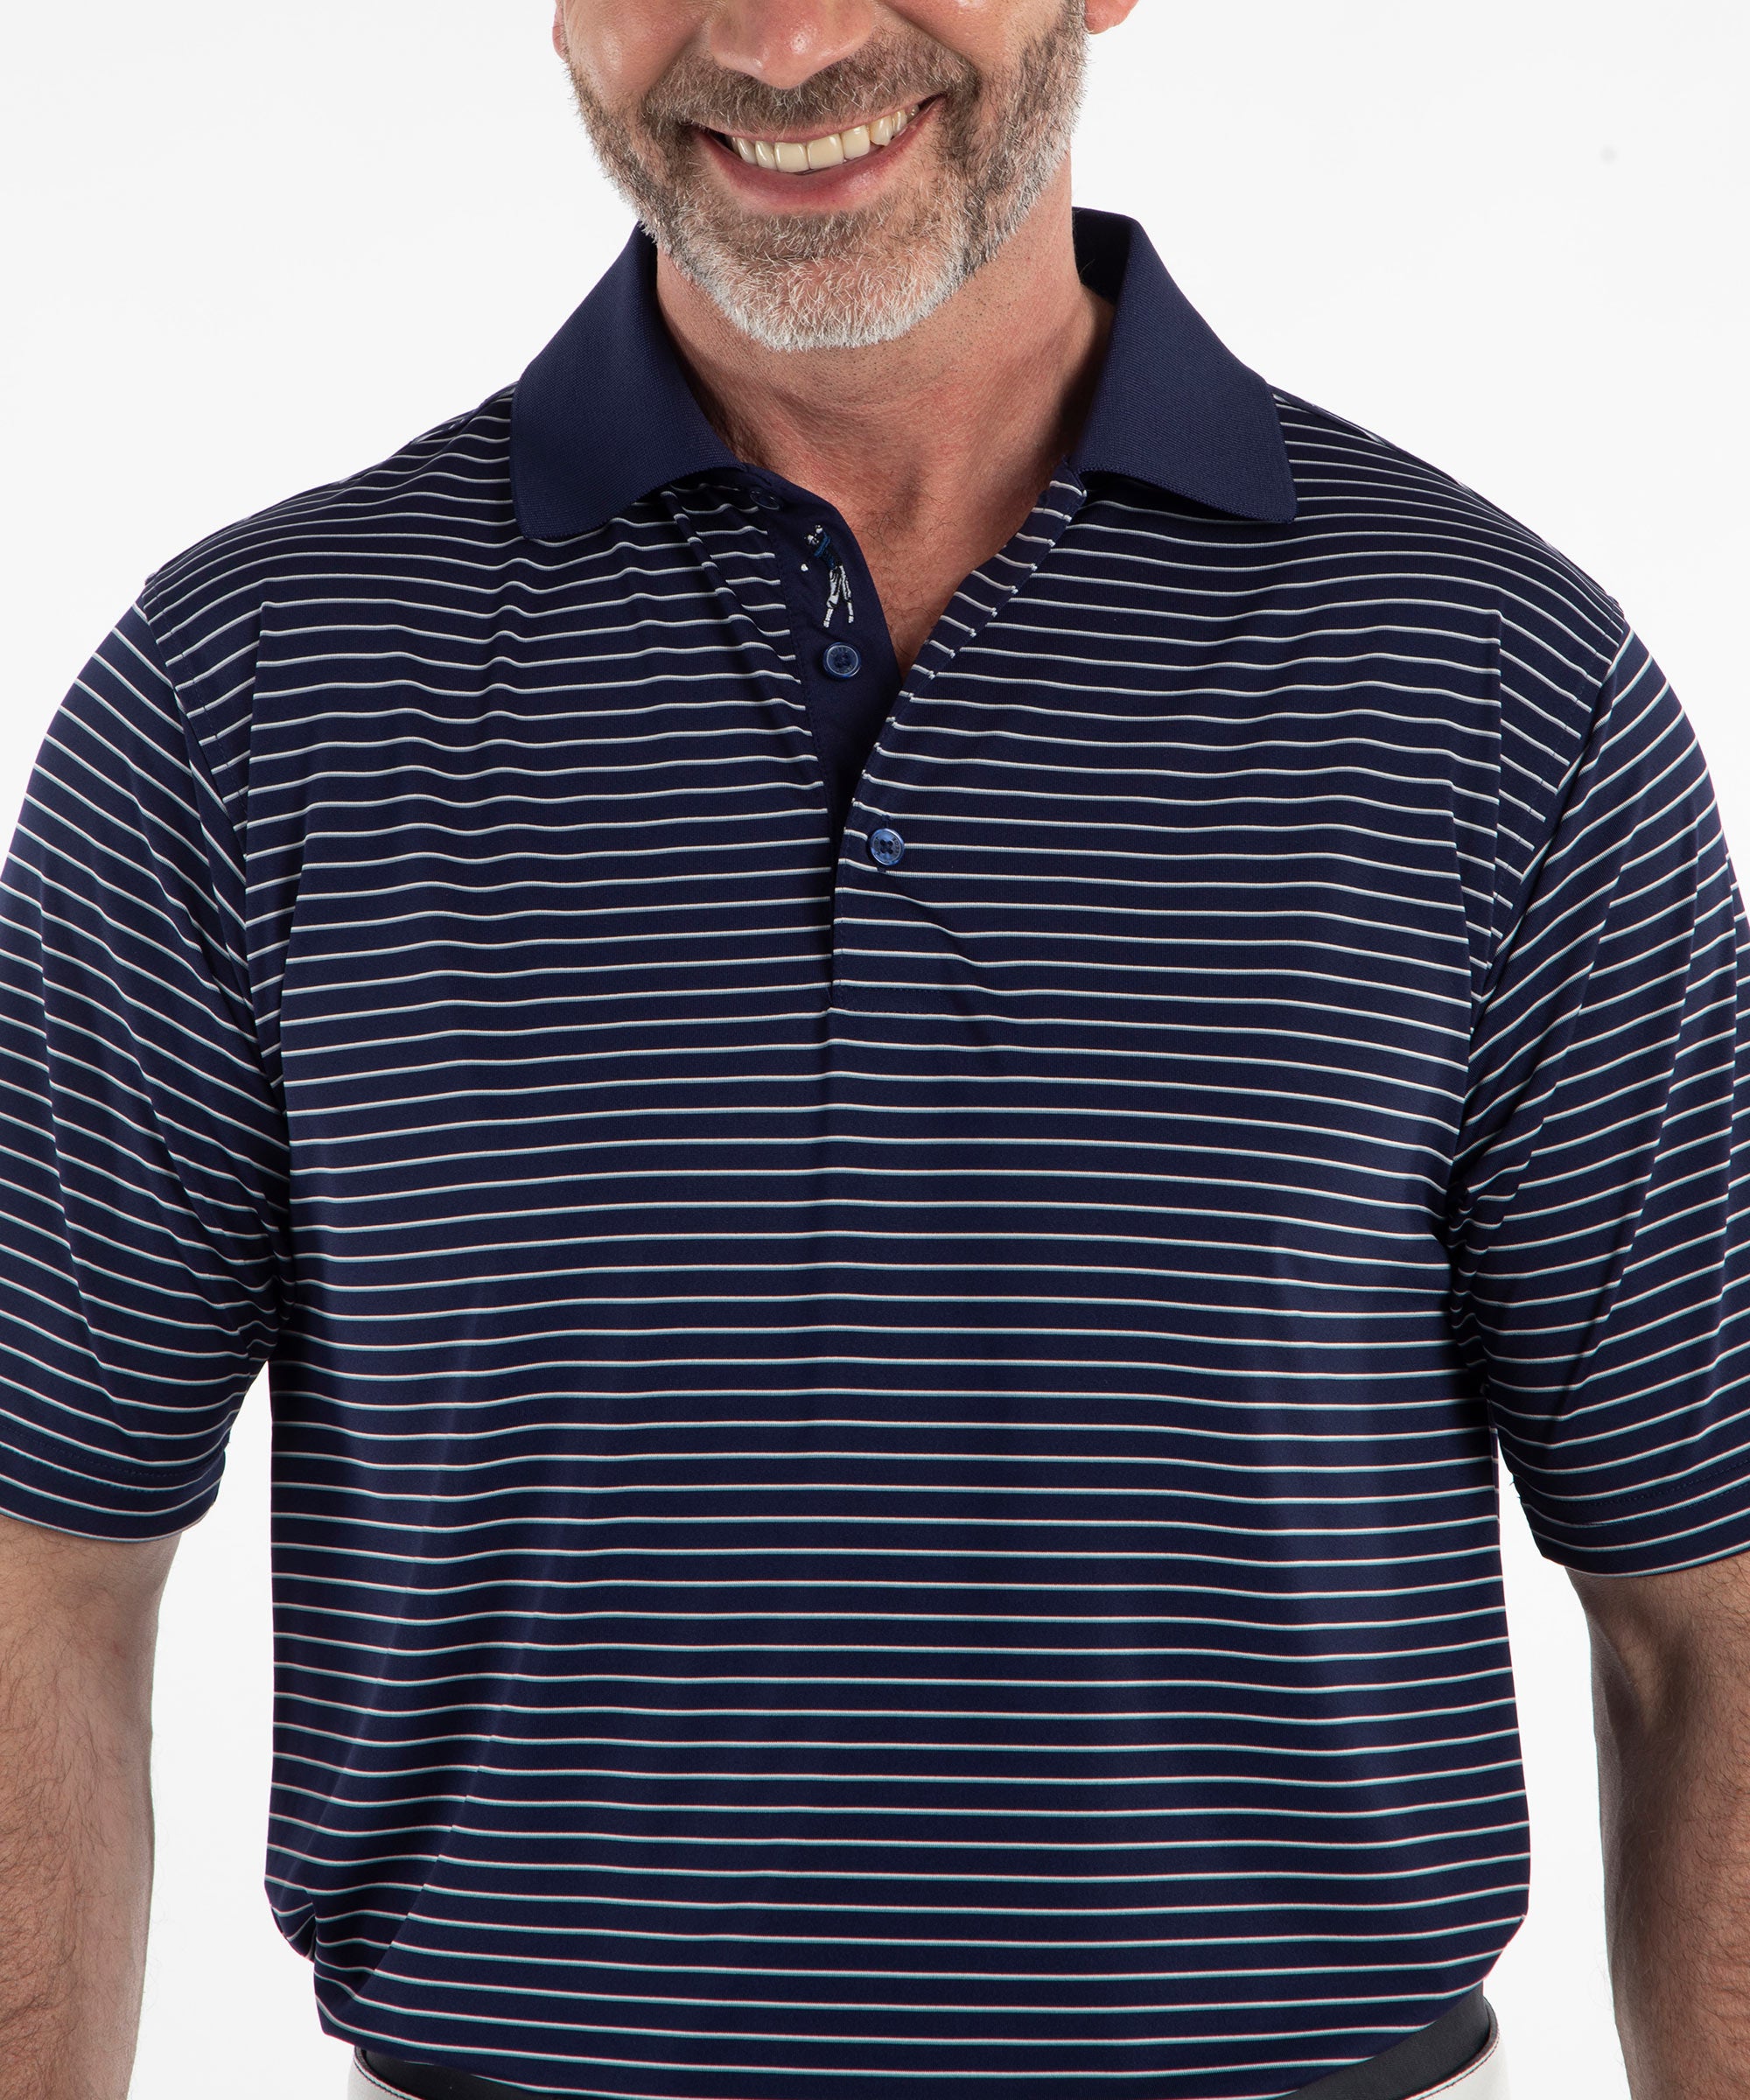 Signature Pisano Stripe 100% Mercerized Cotton Short Sleeve Polo Shirt